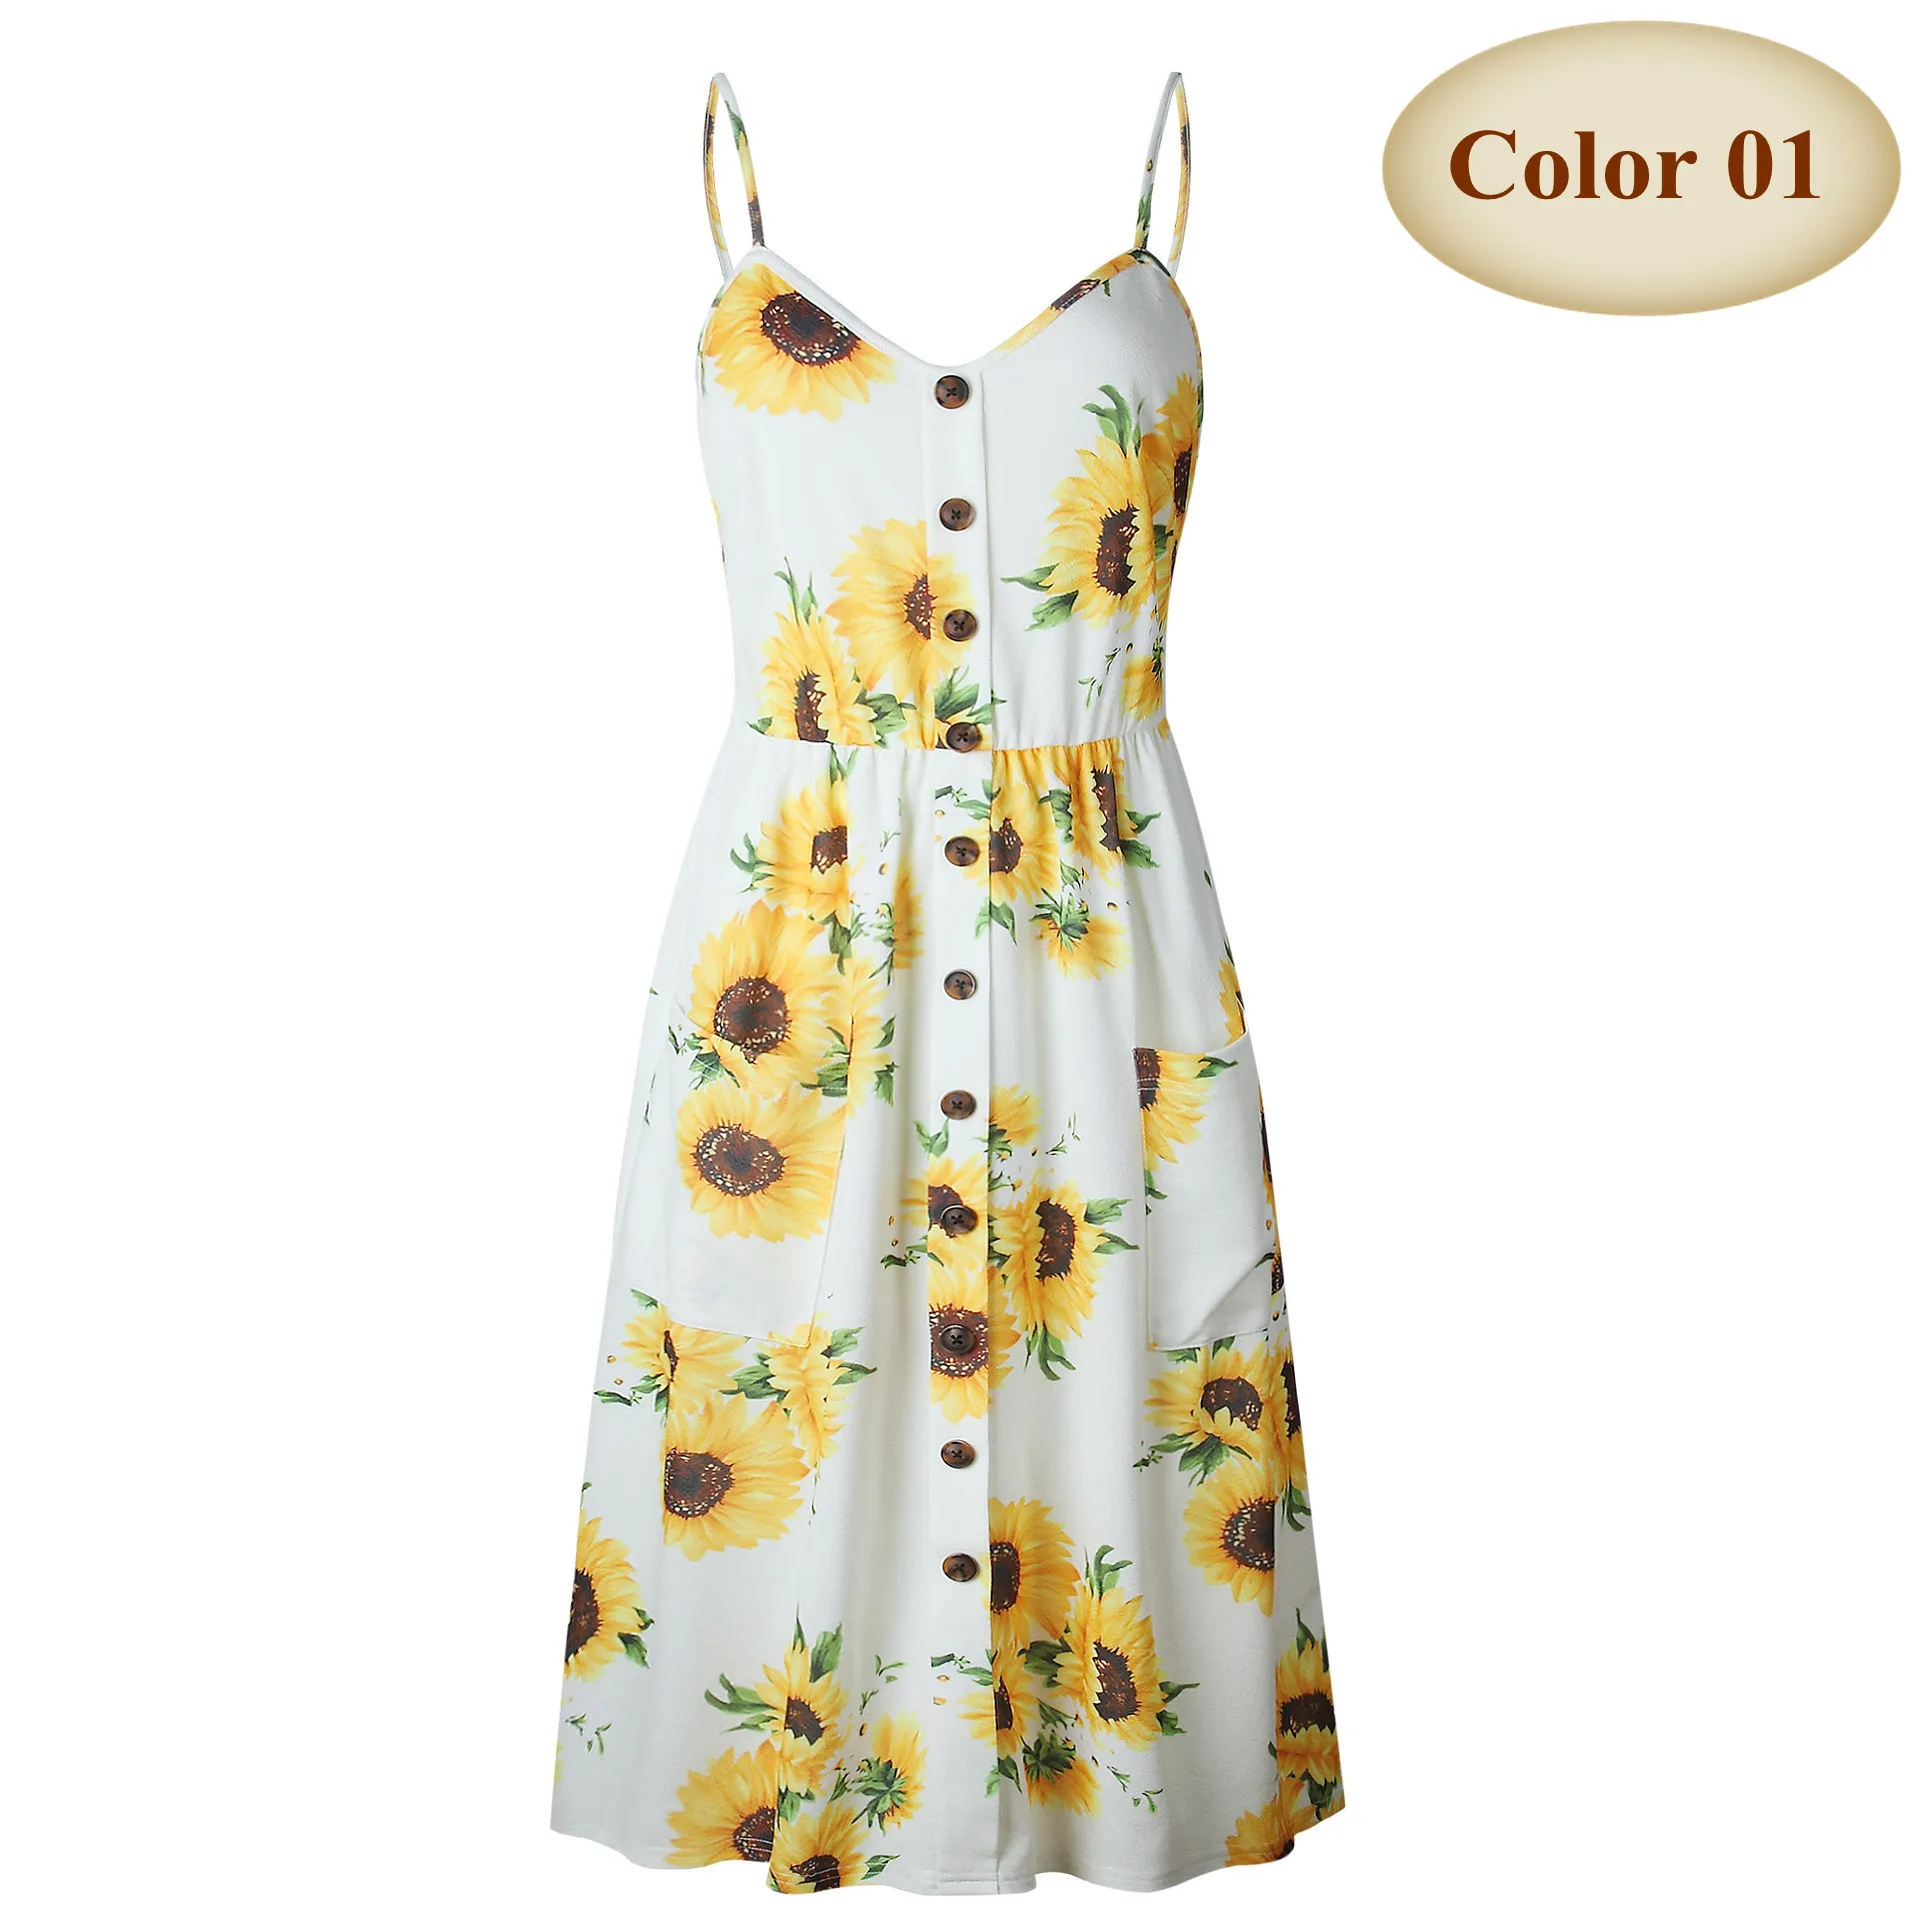 New Boho Off-shoulder Party Beach Sundress Spaghetti Long Dresses Plus Size Summer Women Button Decorated Print Dress CRRIFLZ - Цвет: Color 01